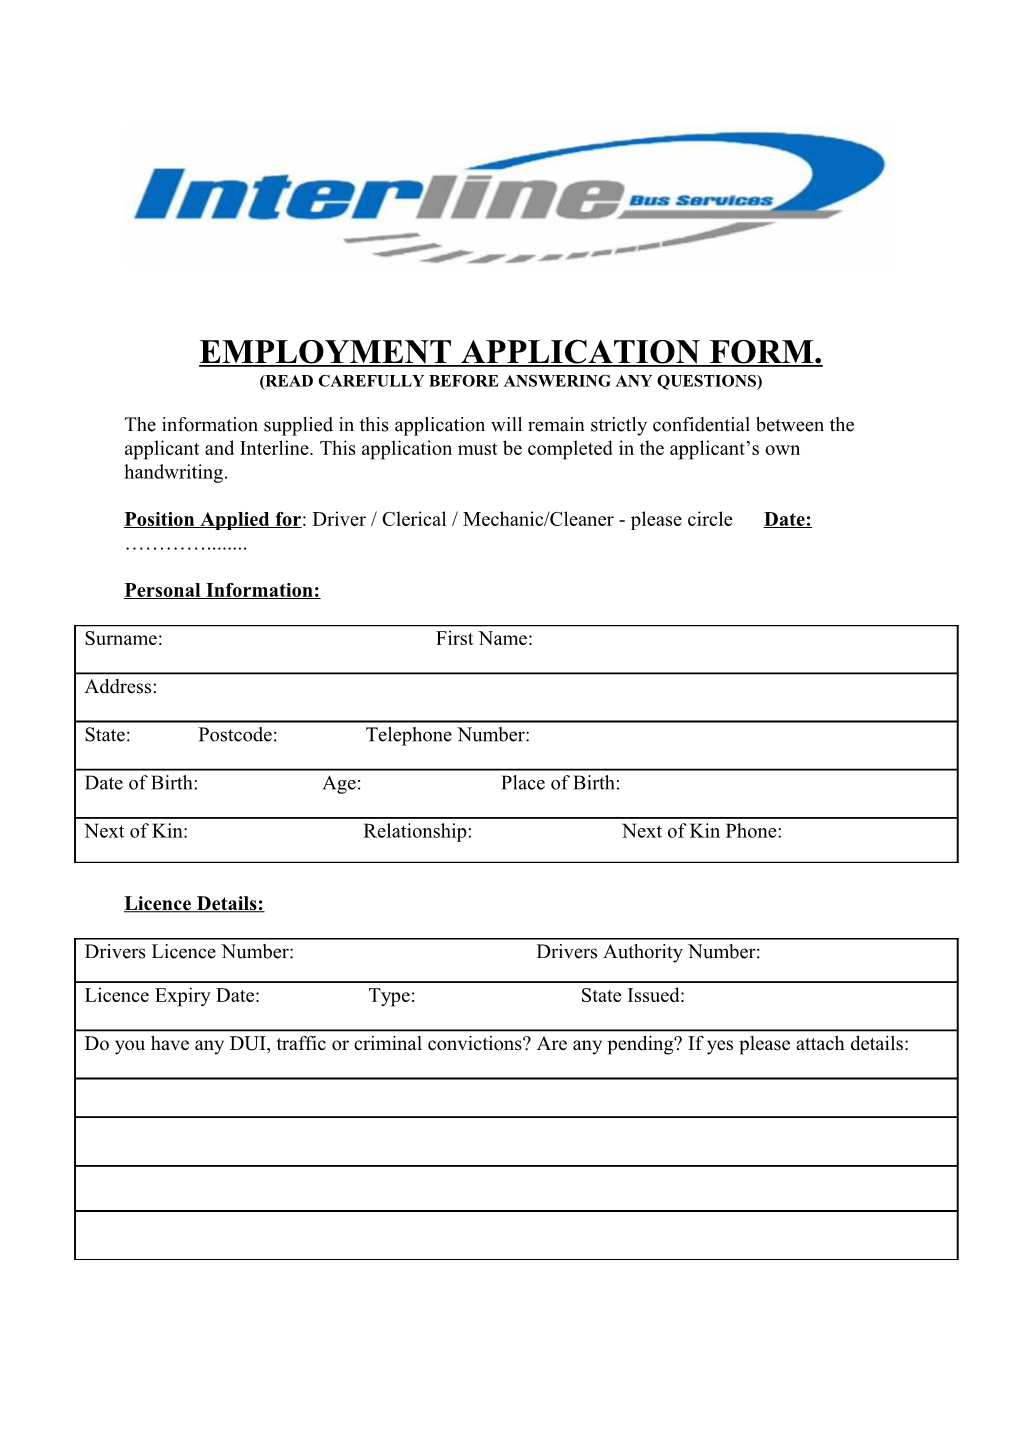 Employment Application Form s8